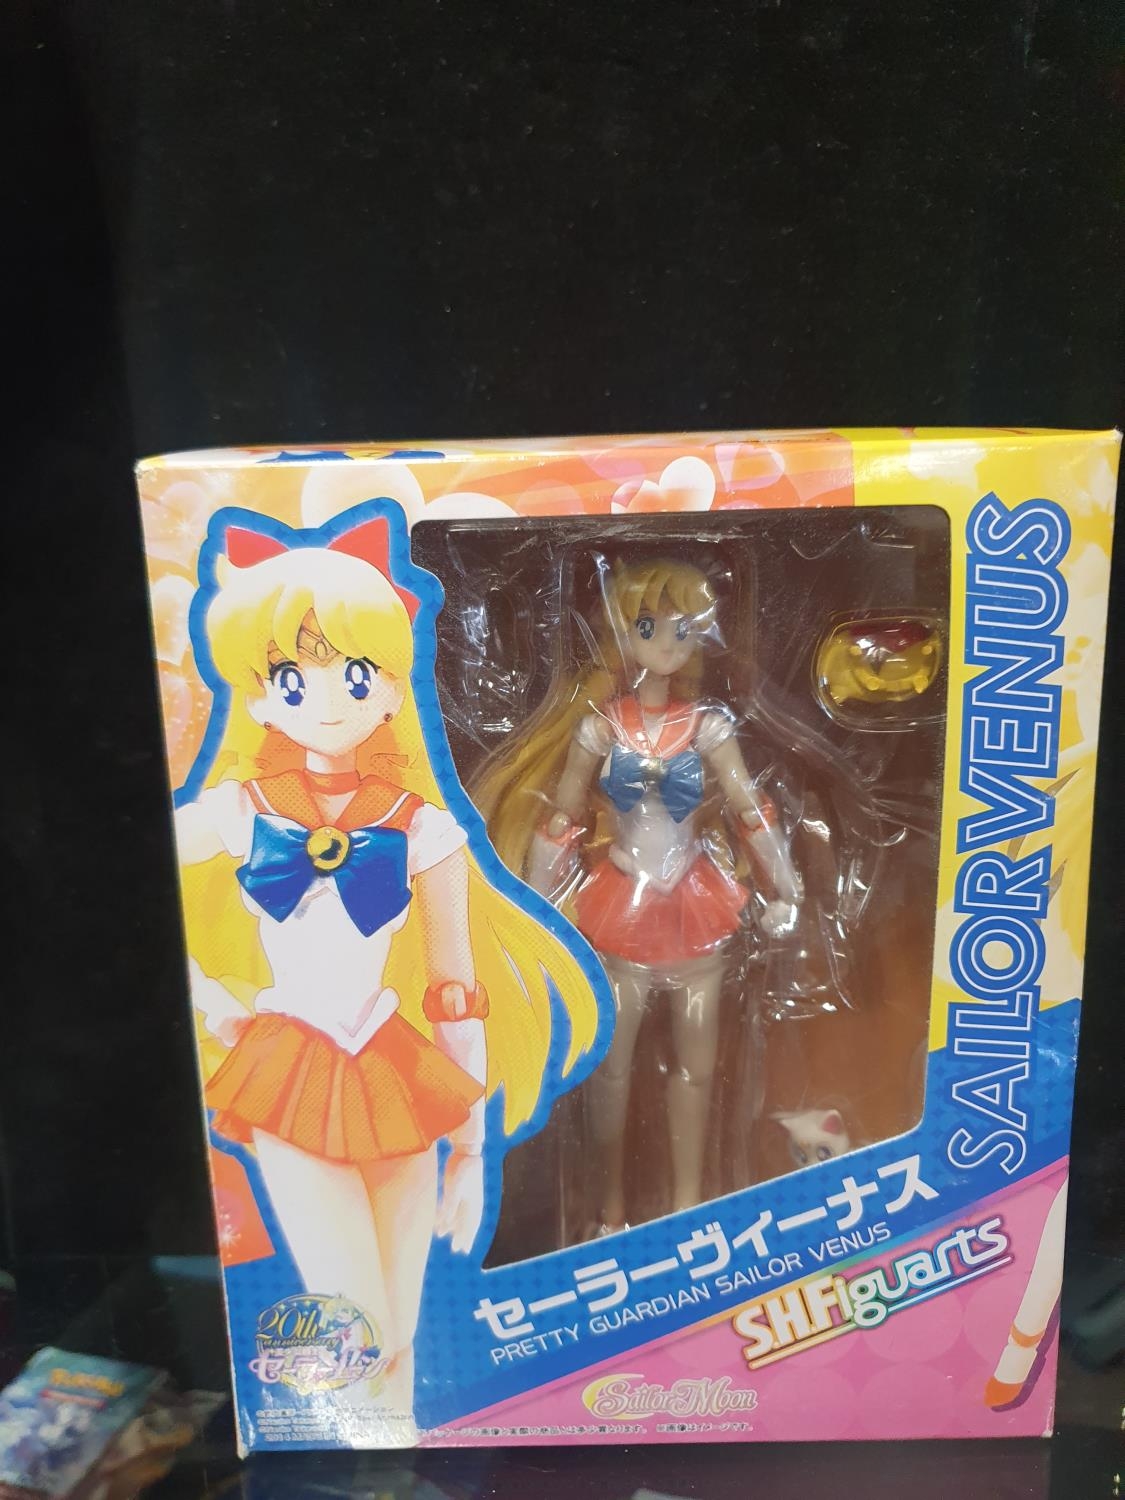 A boxed S.H.figuarts Sailor Venus figure. (unchecked)